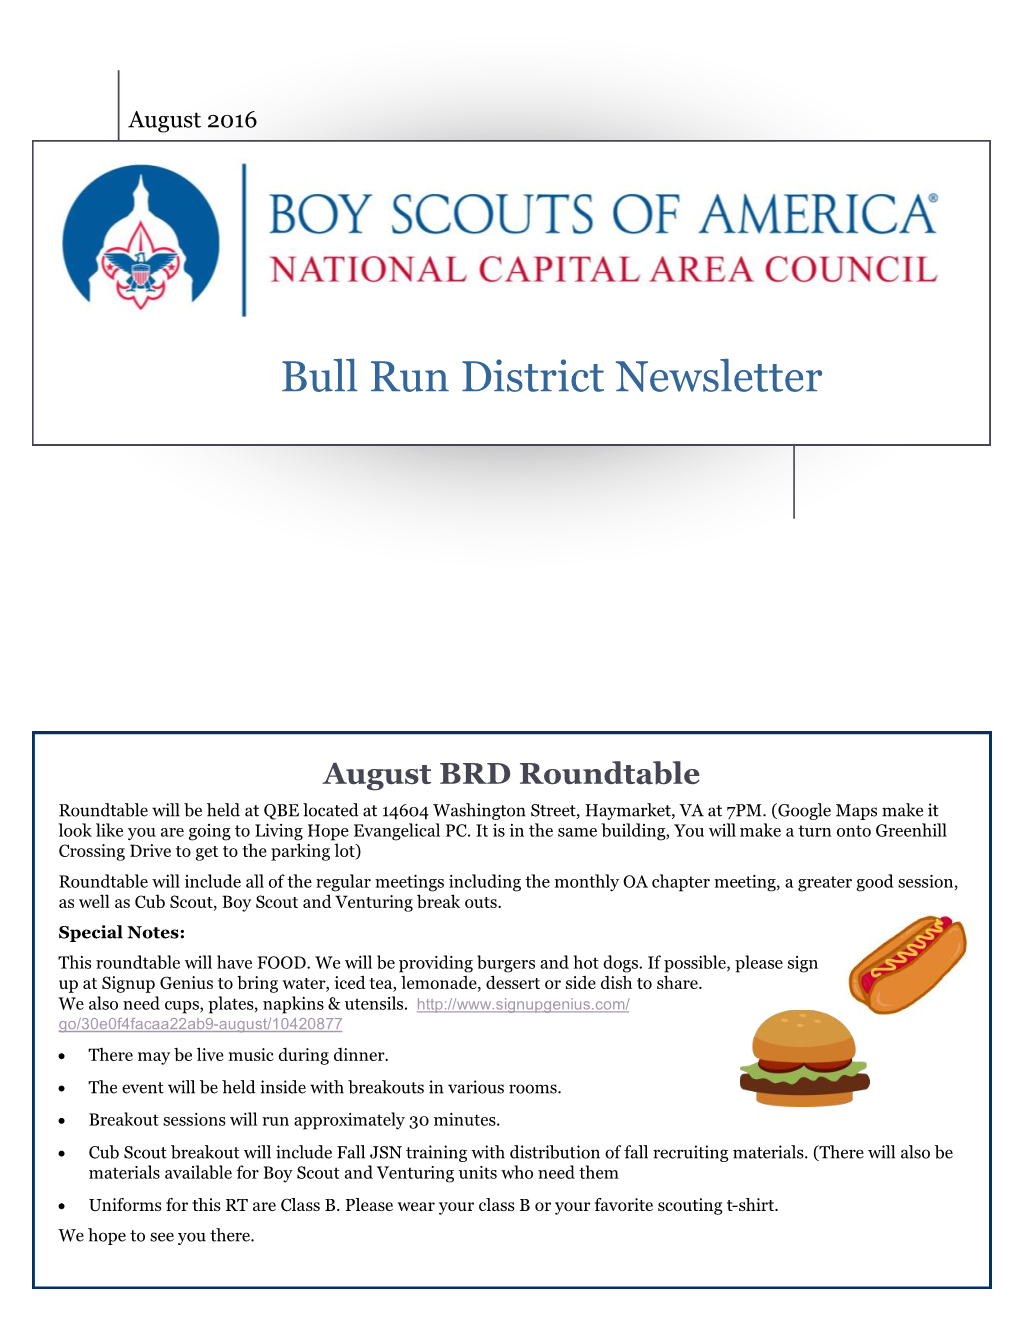 Bull Run District Newsletter